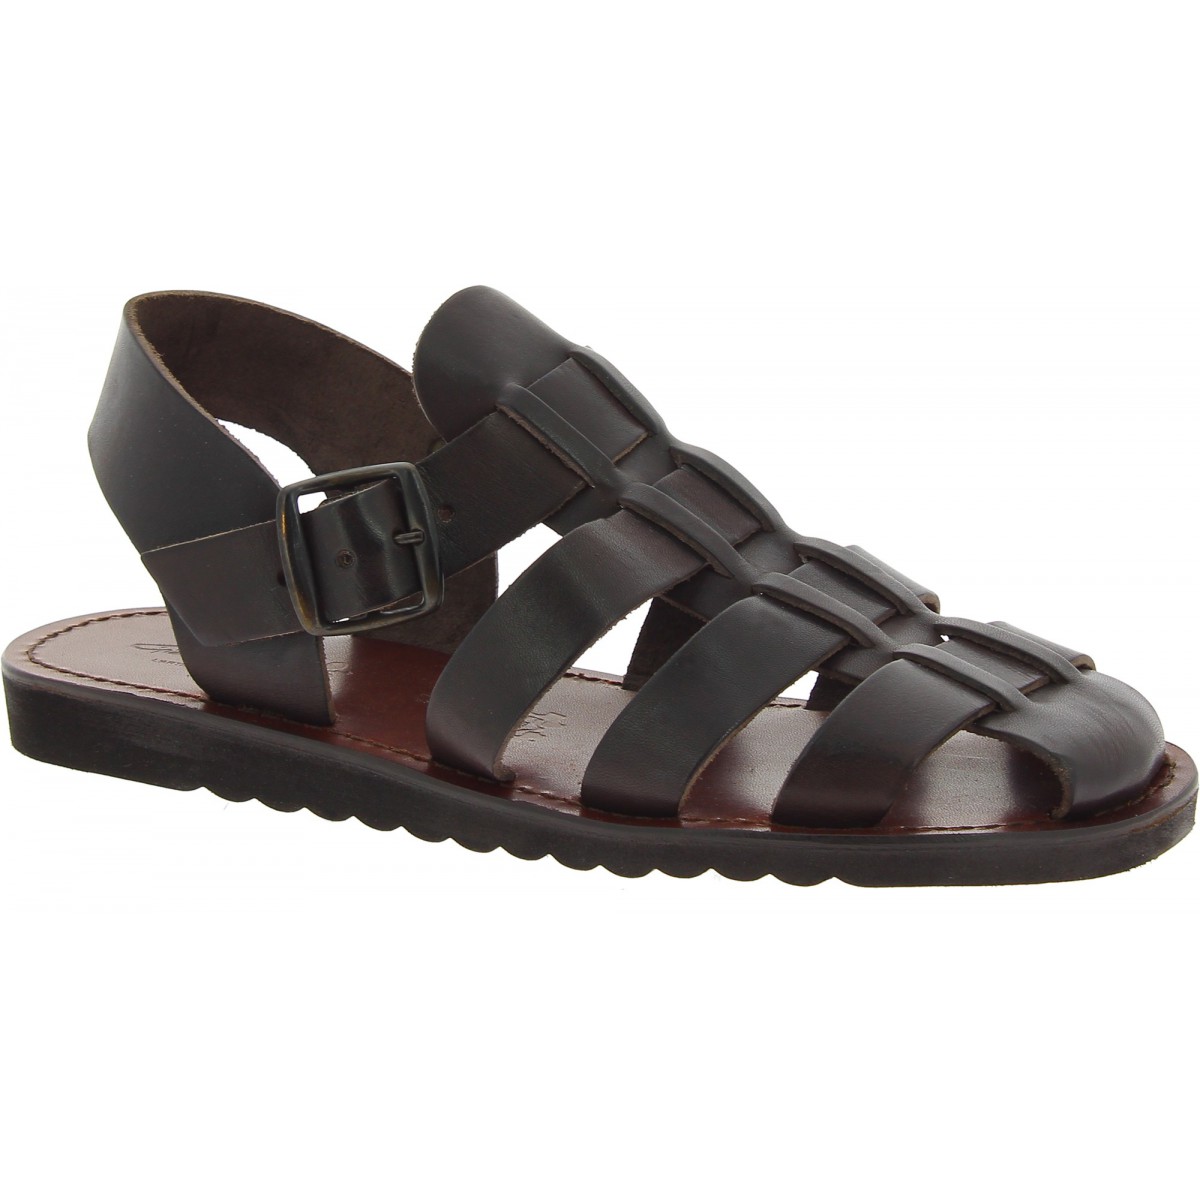 Dark brown leather thongs sandals for men Handmade